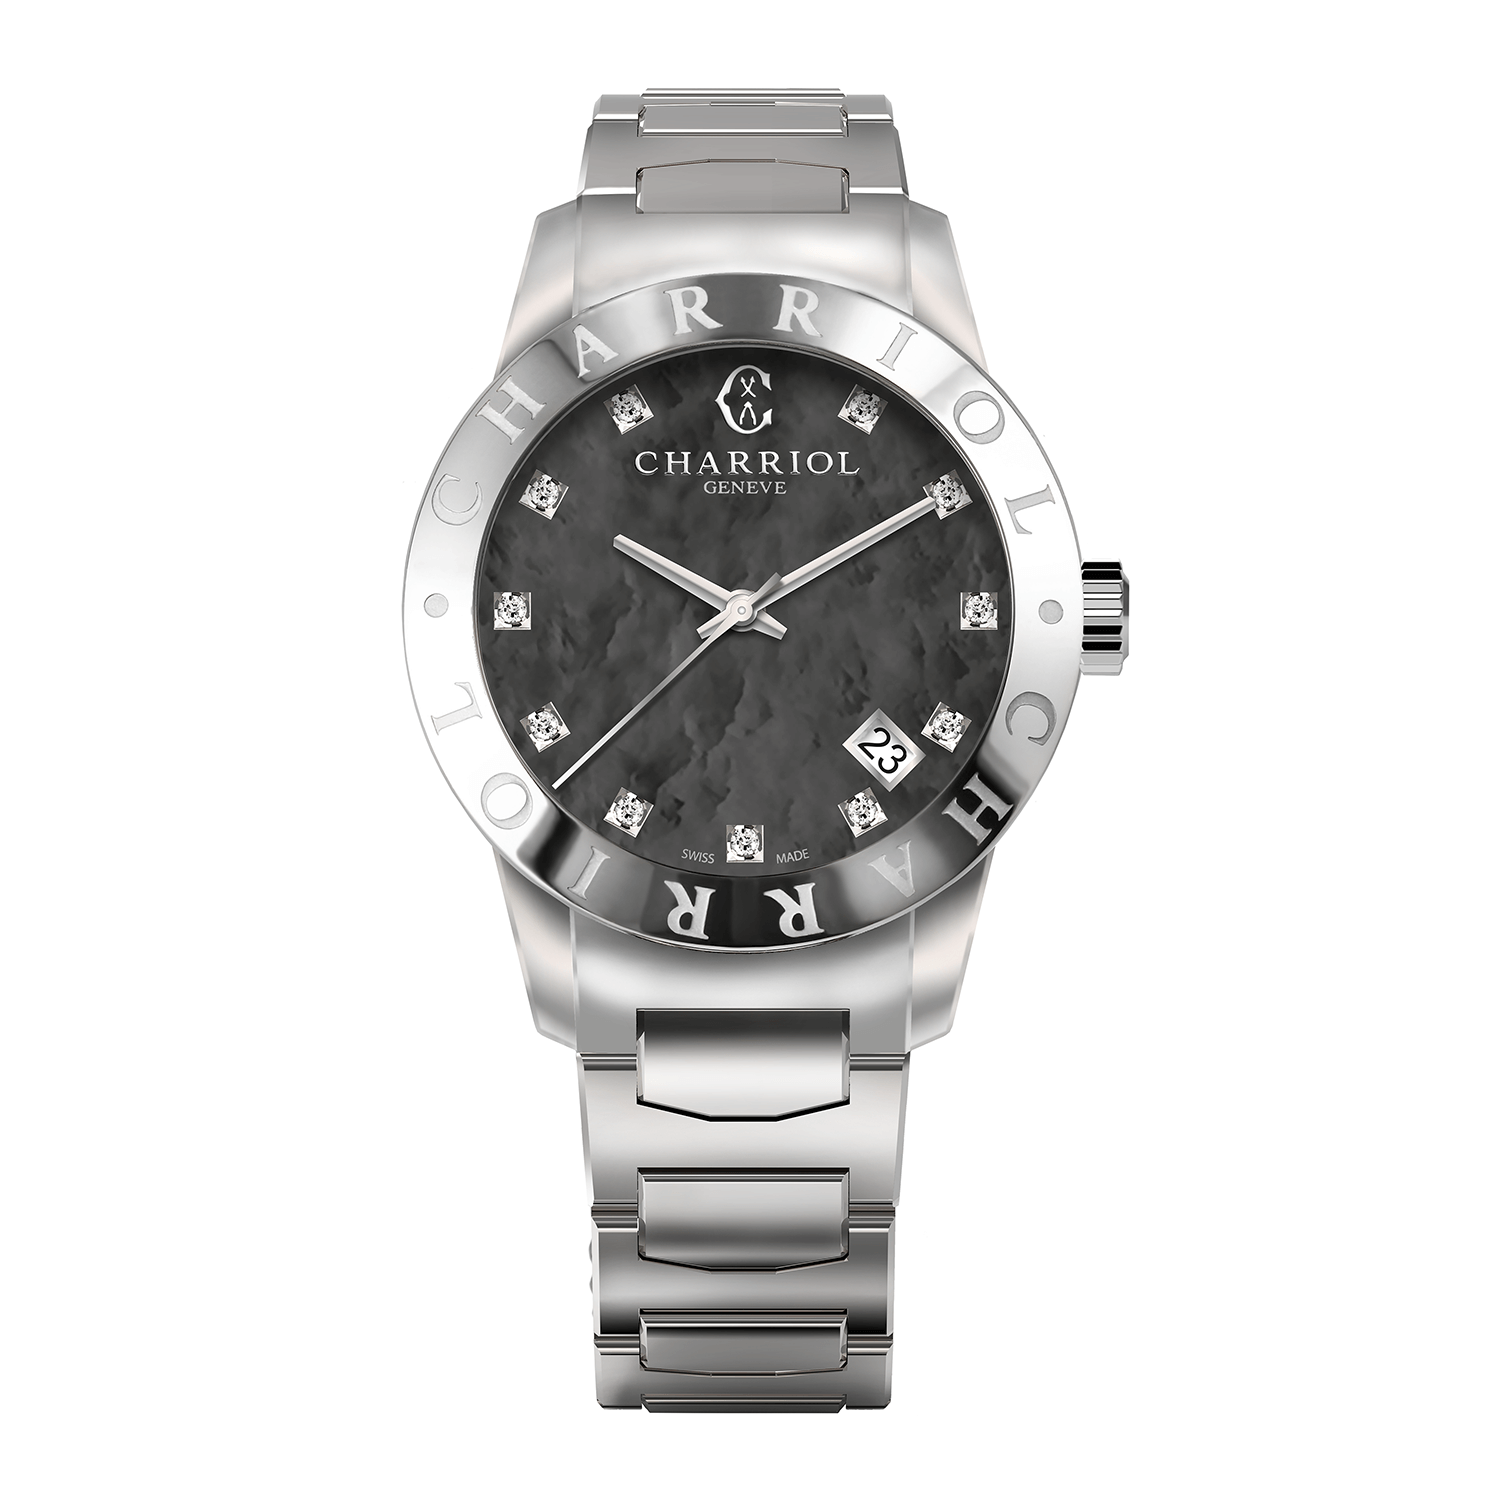 Alexandre C Watch Black and Steel - Charriol Geneve -  Watch